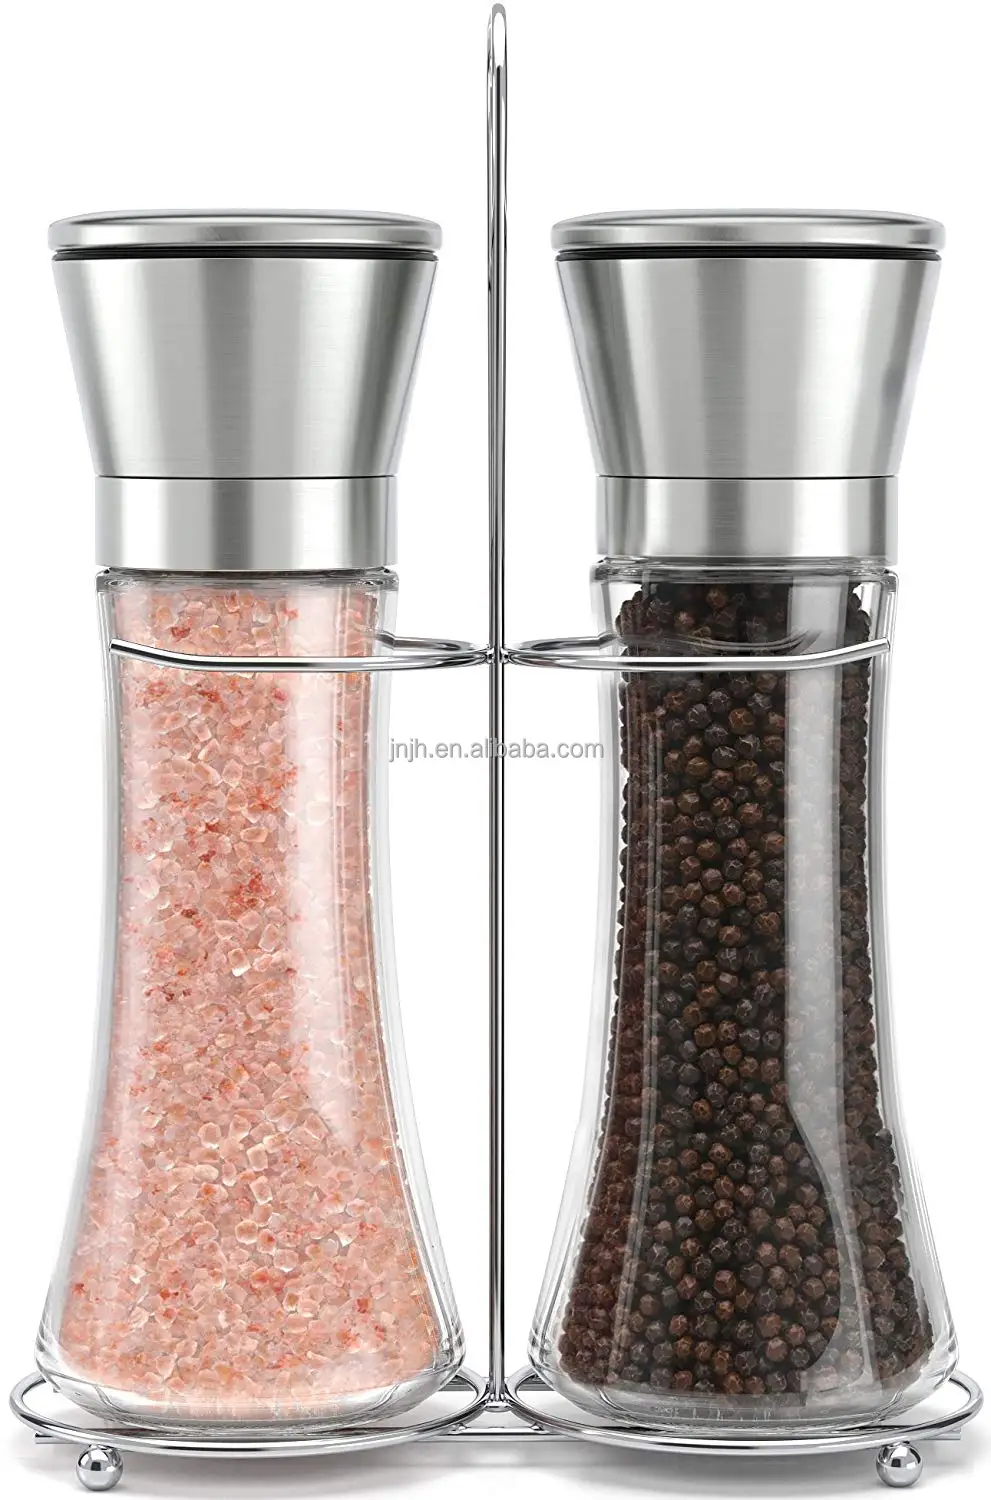 Salt And Pepper Grinder, Stainless Steel Adjustable Ceramic Sea